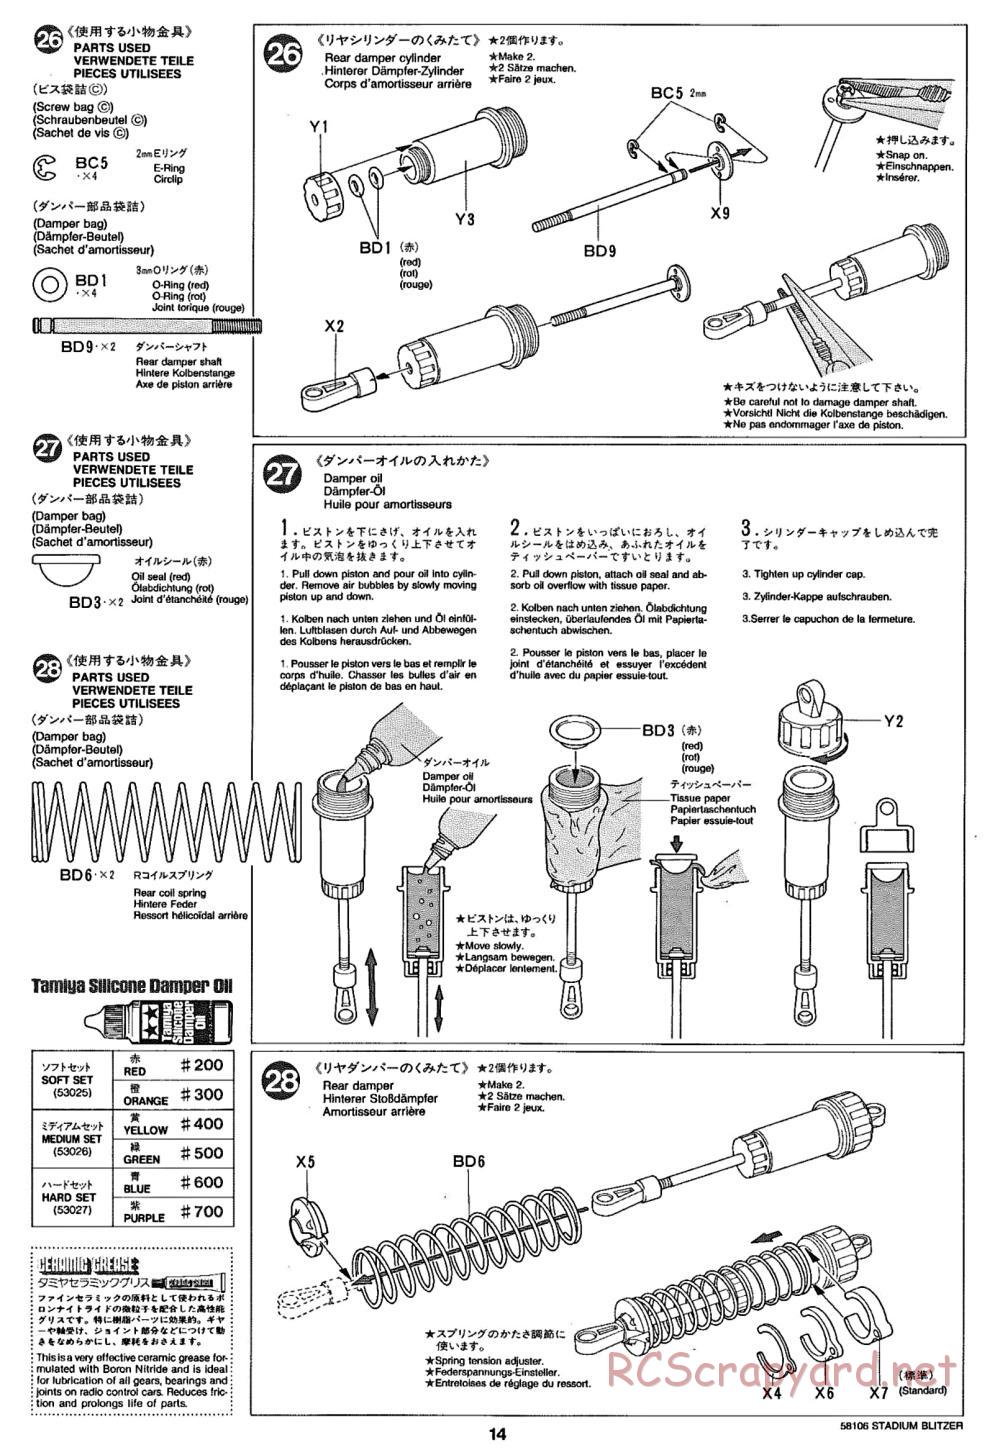 Tamiya - Stadium Blitzer Chassis - Manual - Page 14